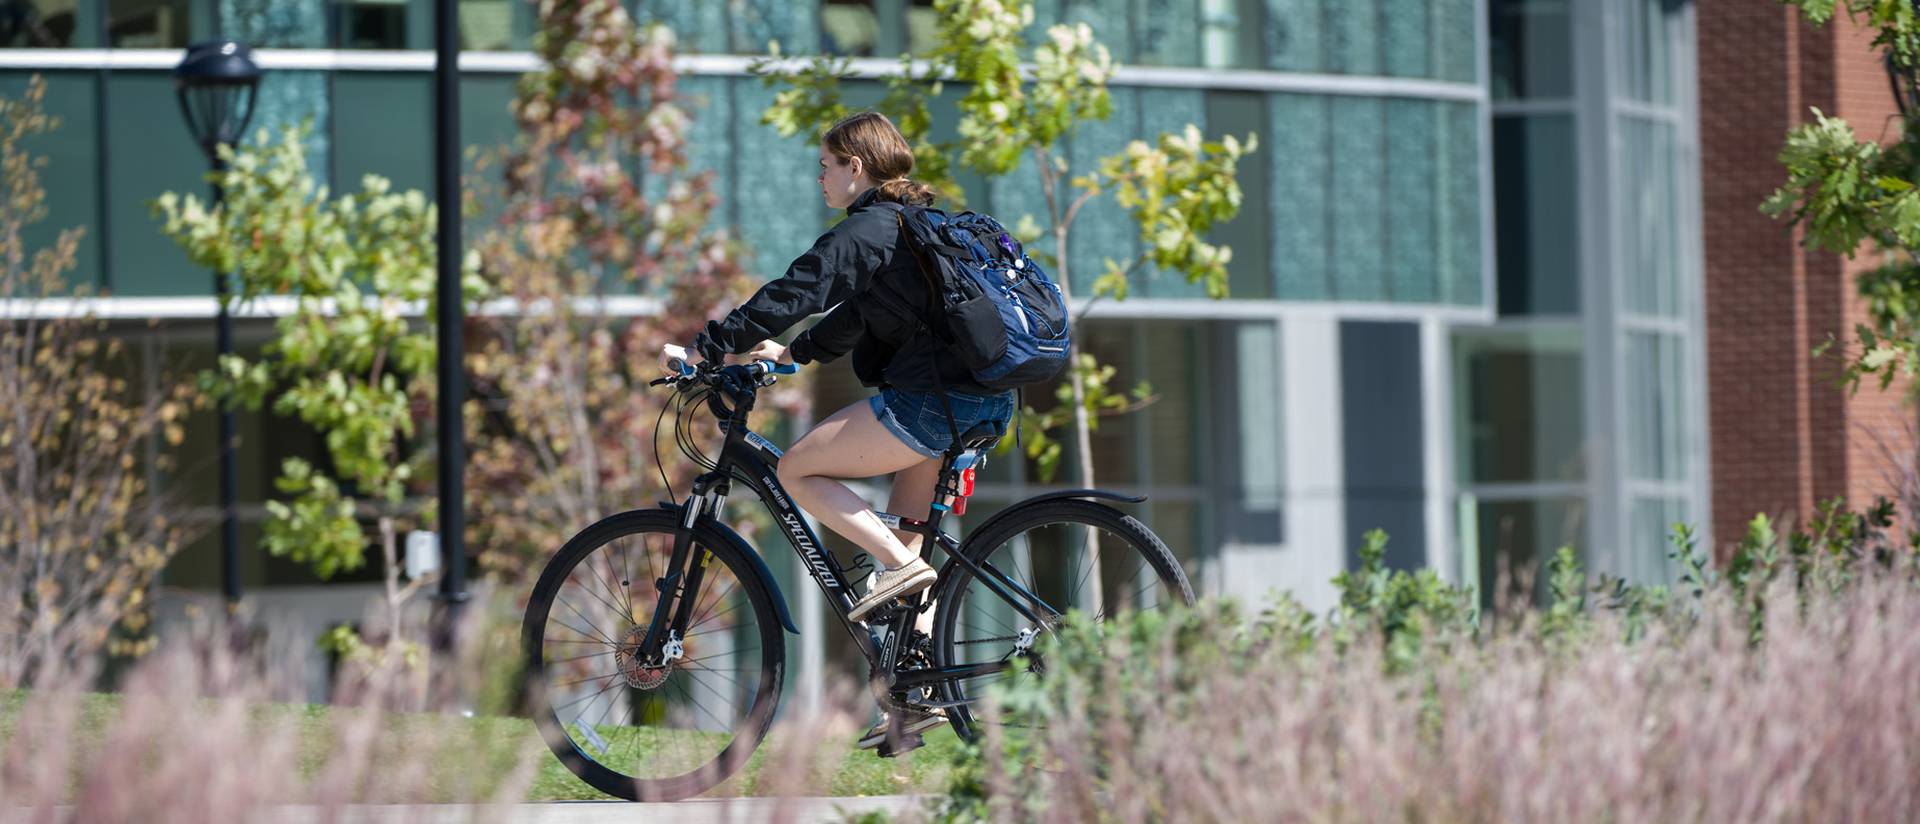 Student biking across campus